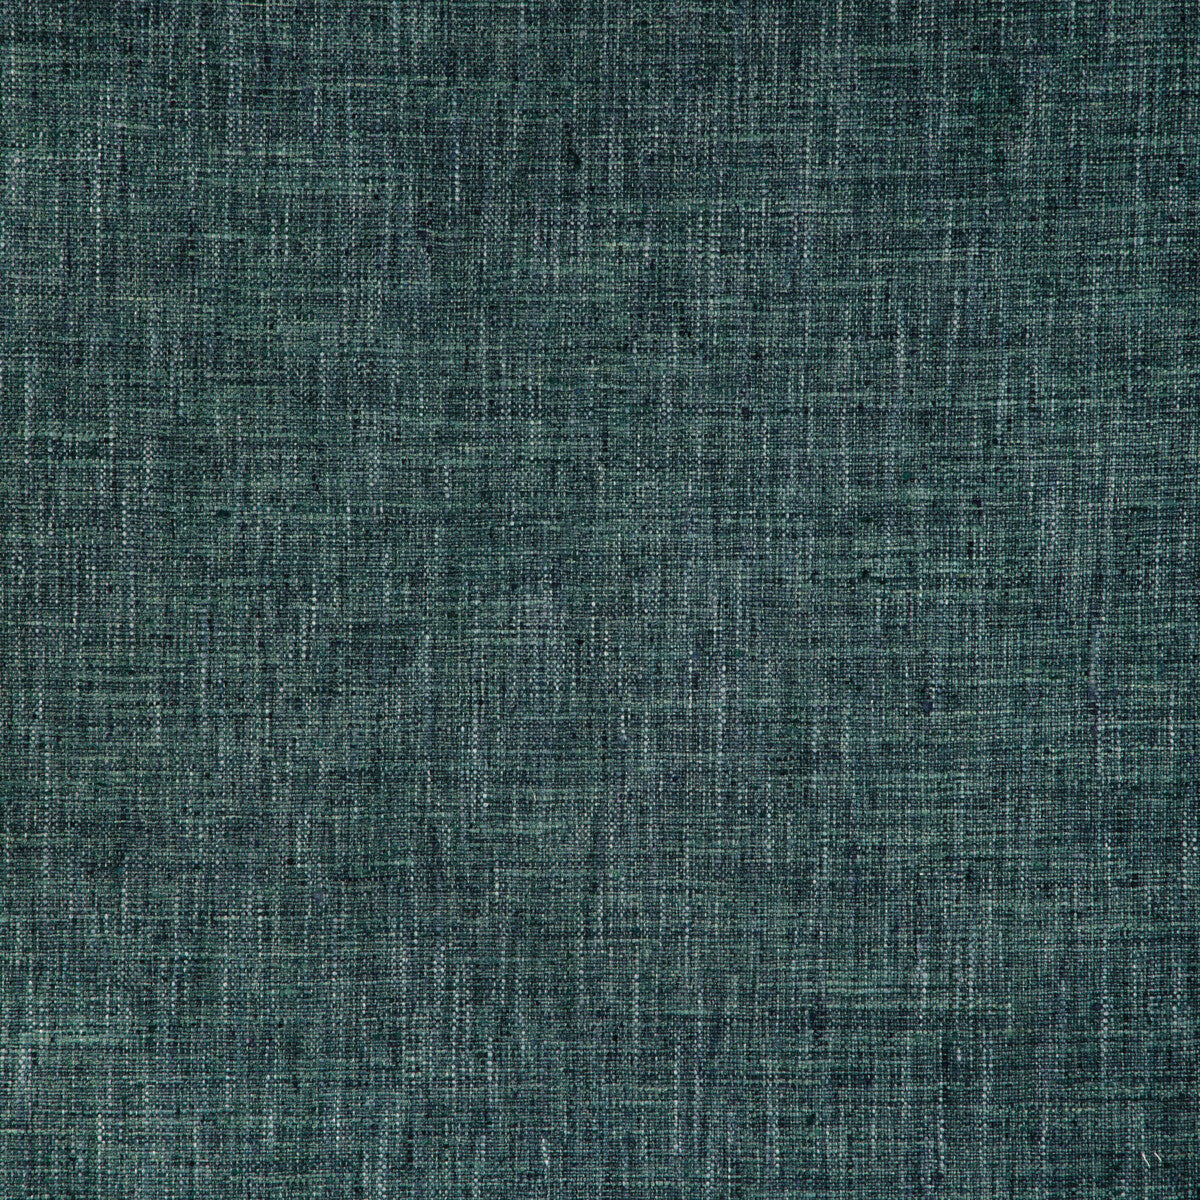 Kravet Smart fabric in 34083-350 color - pattern 34083.350.0 - by Kravet Smart